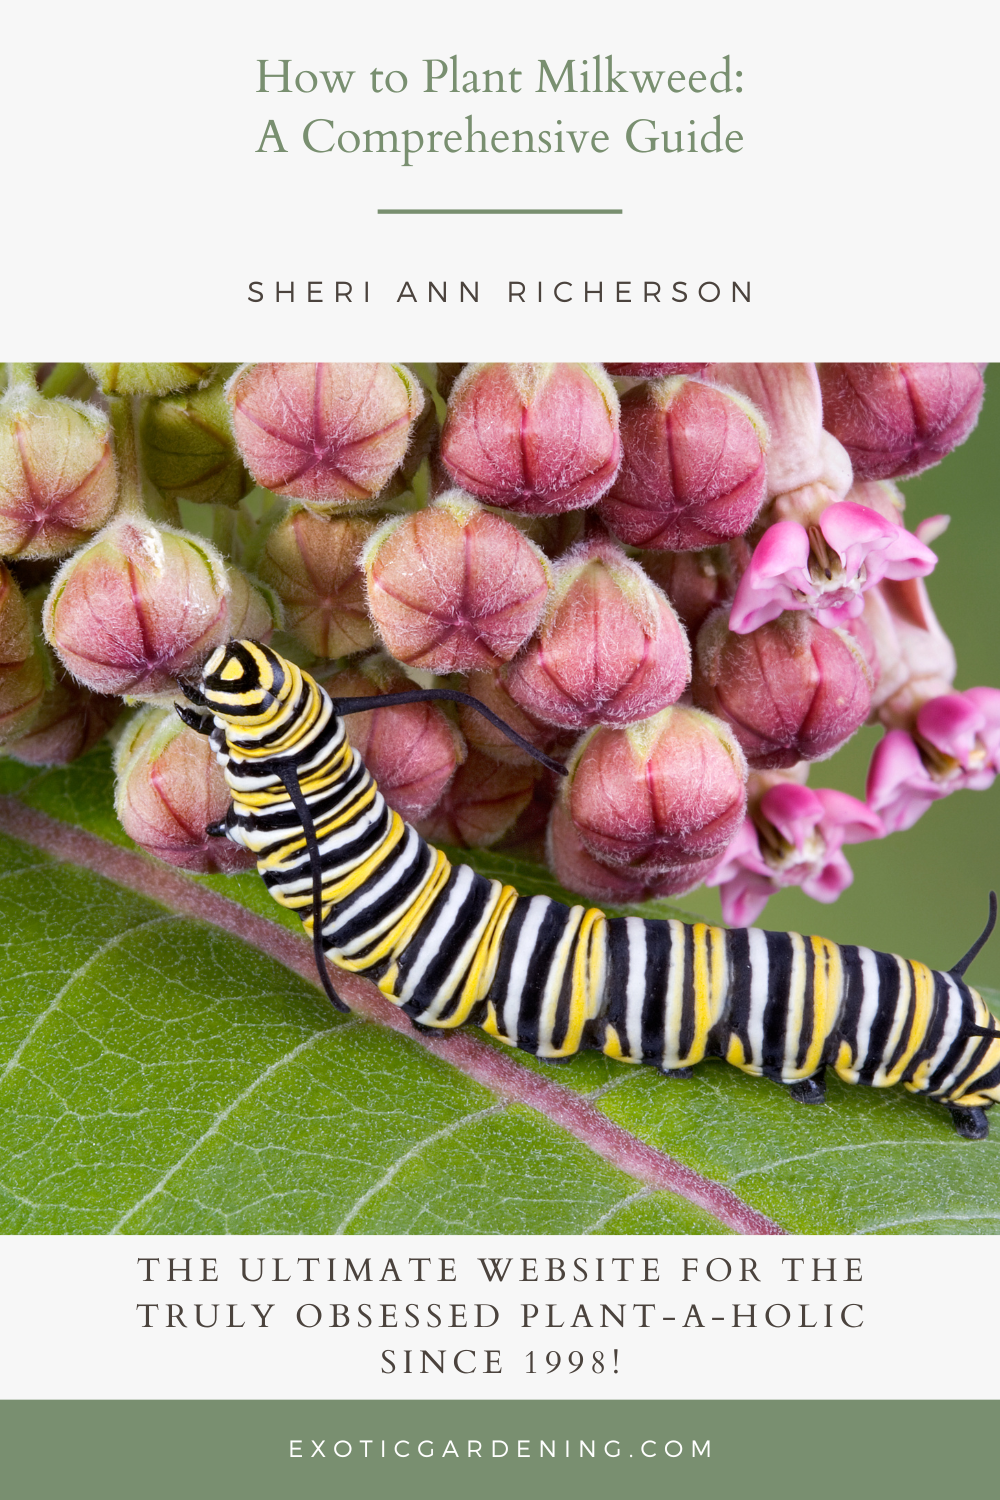 A Monarch caterpillar on a milkweed leaf near an unopened milkweed flower.